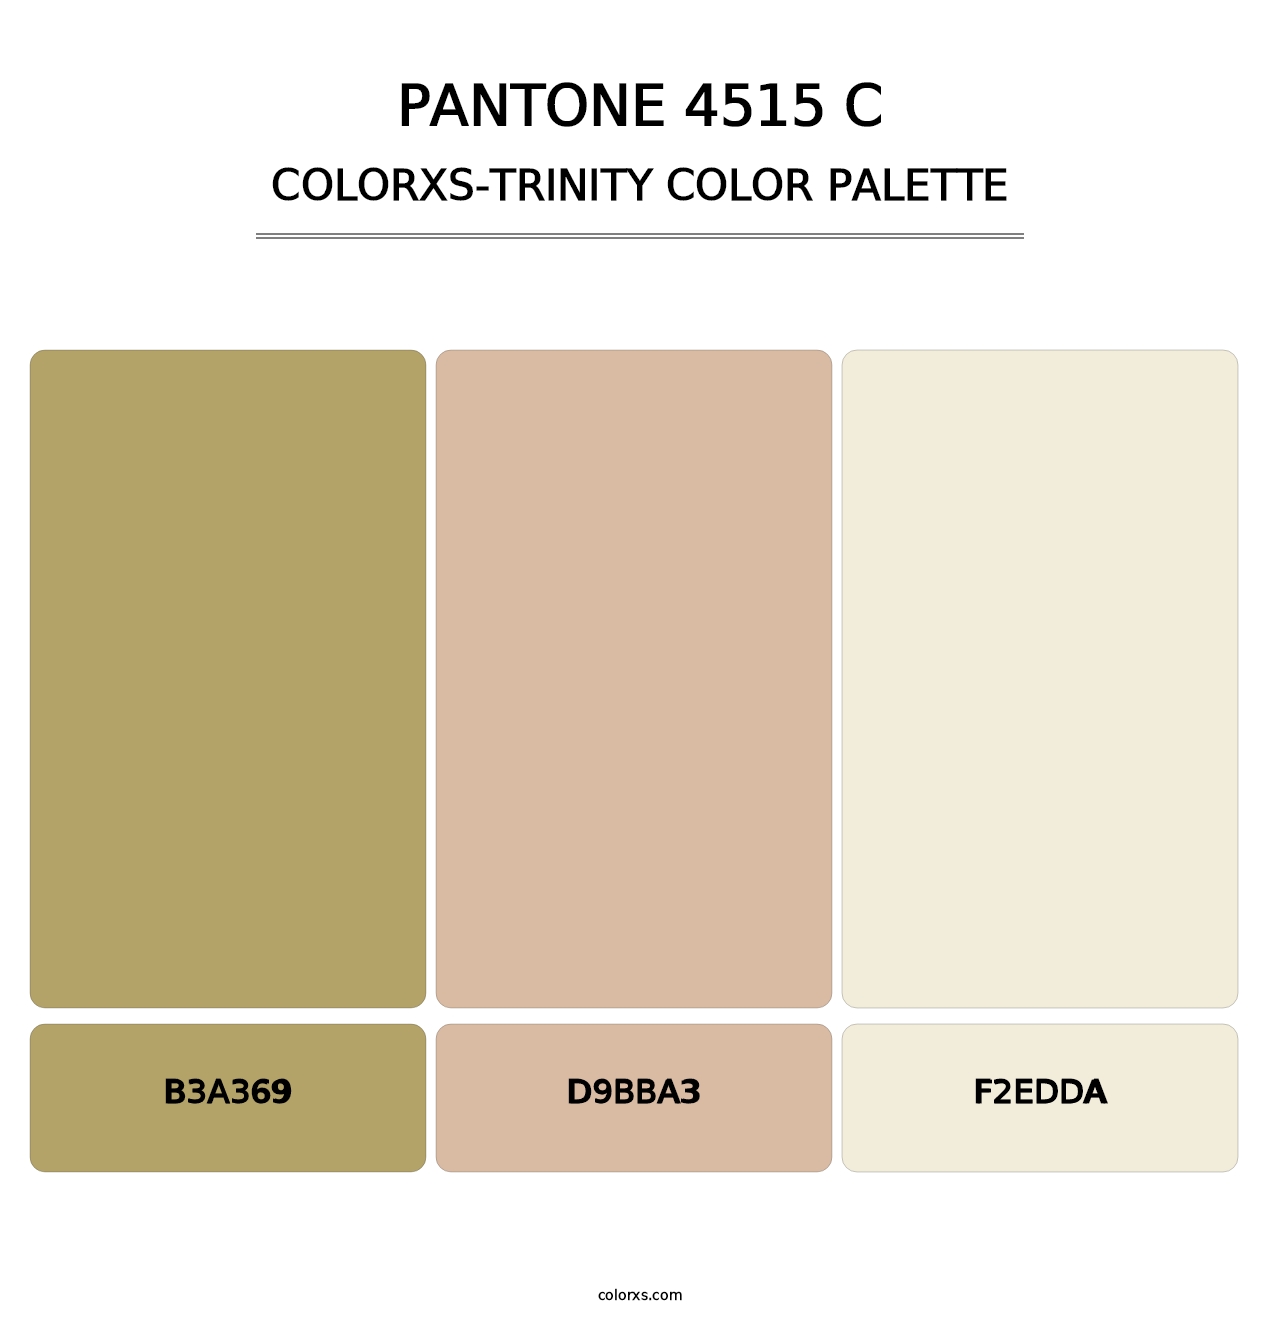 PANTONE 4515 C - Colorxs Trinity Palette